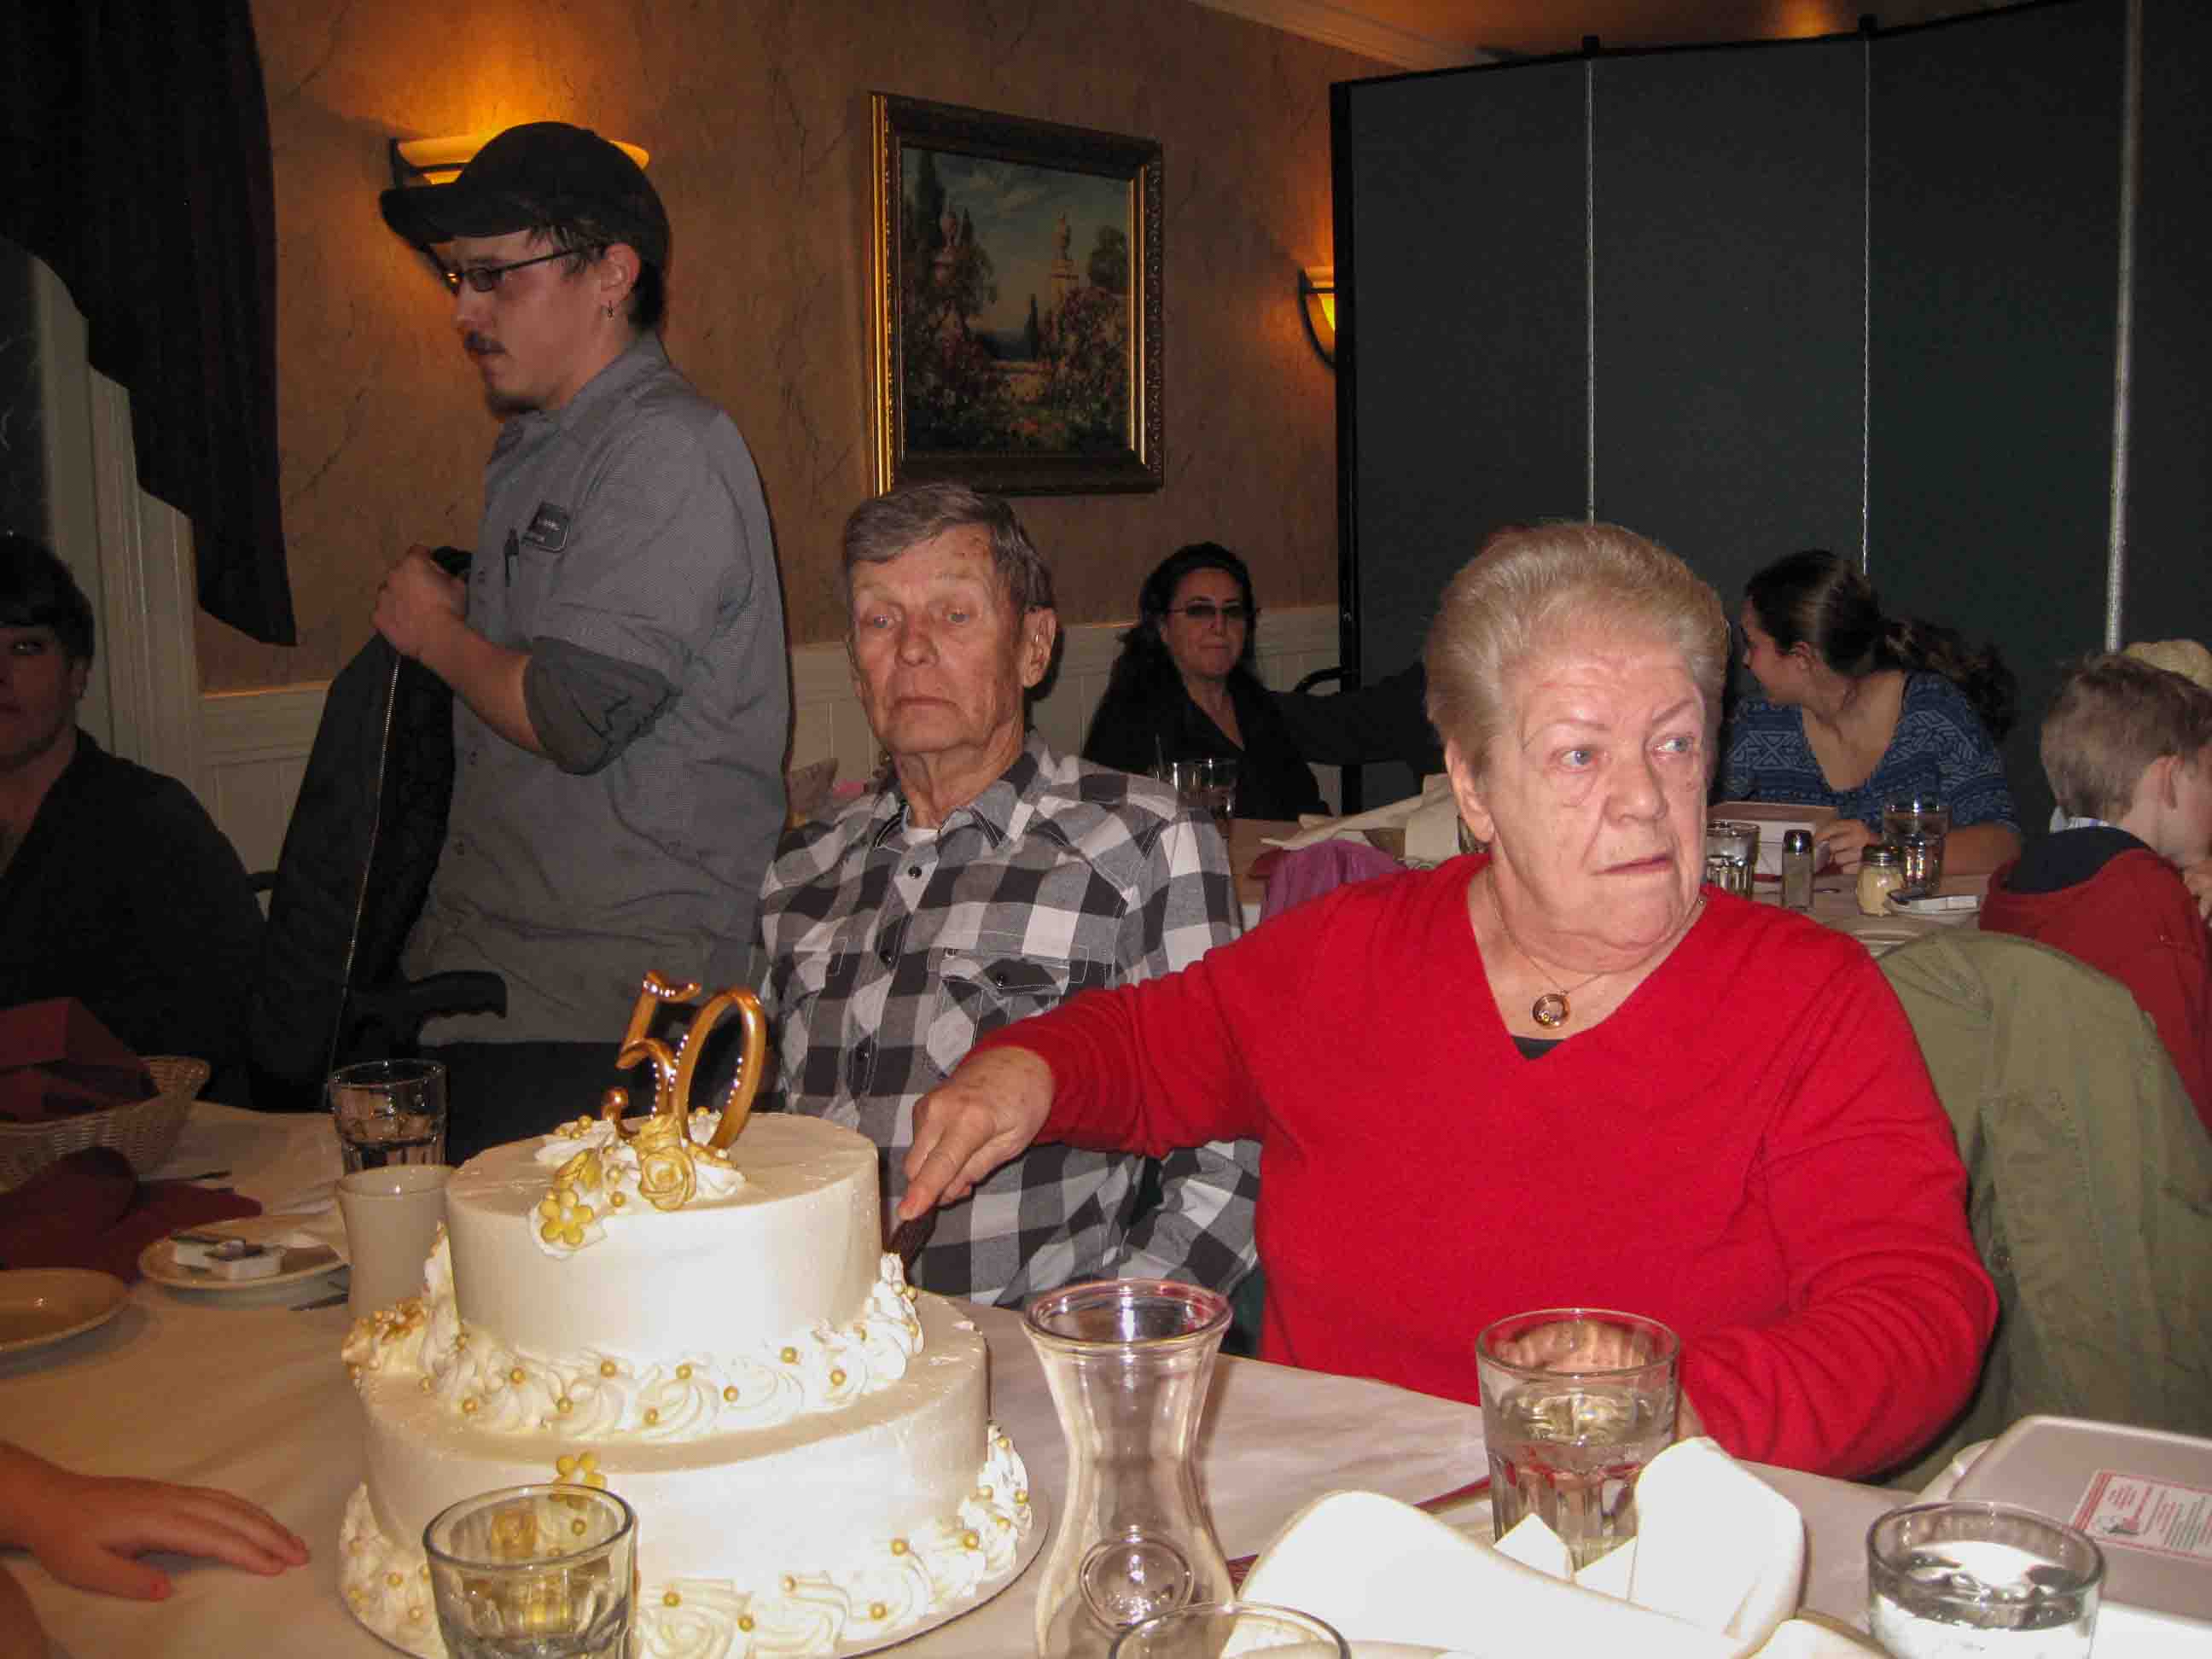 Celebrating the 50th Wedding Anniversary of Shirley & Joel Sexton.  Mark Sexton, Joel, DeeDee Sexton, Shirley 
Location:  TAT Restaurant, Columbus OH
Date:  29 Mar 2014
Source:  Julane Crabtree